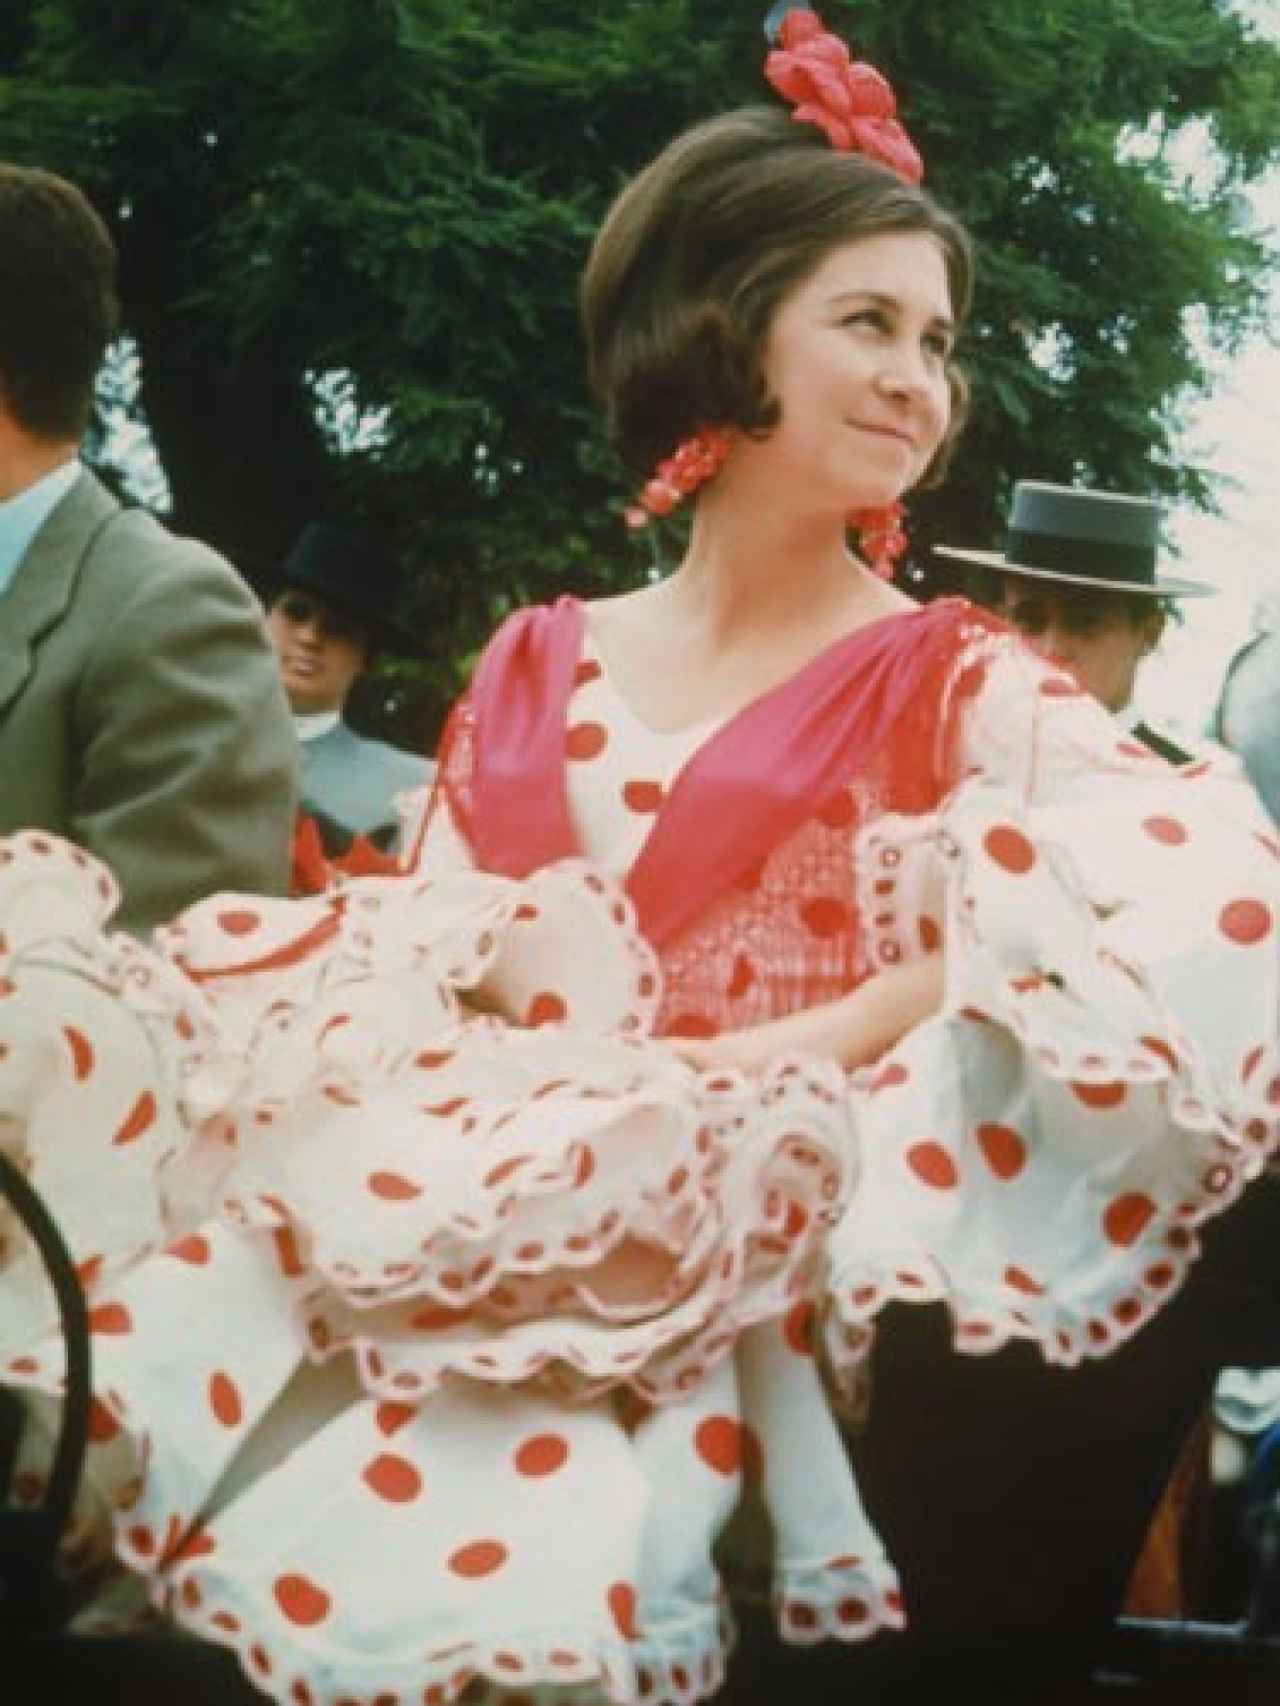 La reina Sofía en la feria de Sevilla vestida de Lina 1960.